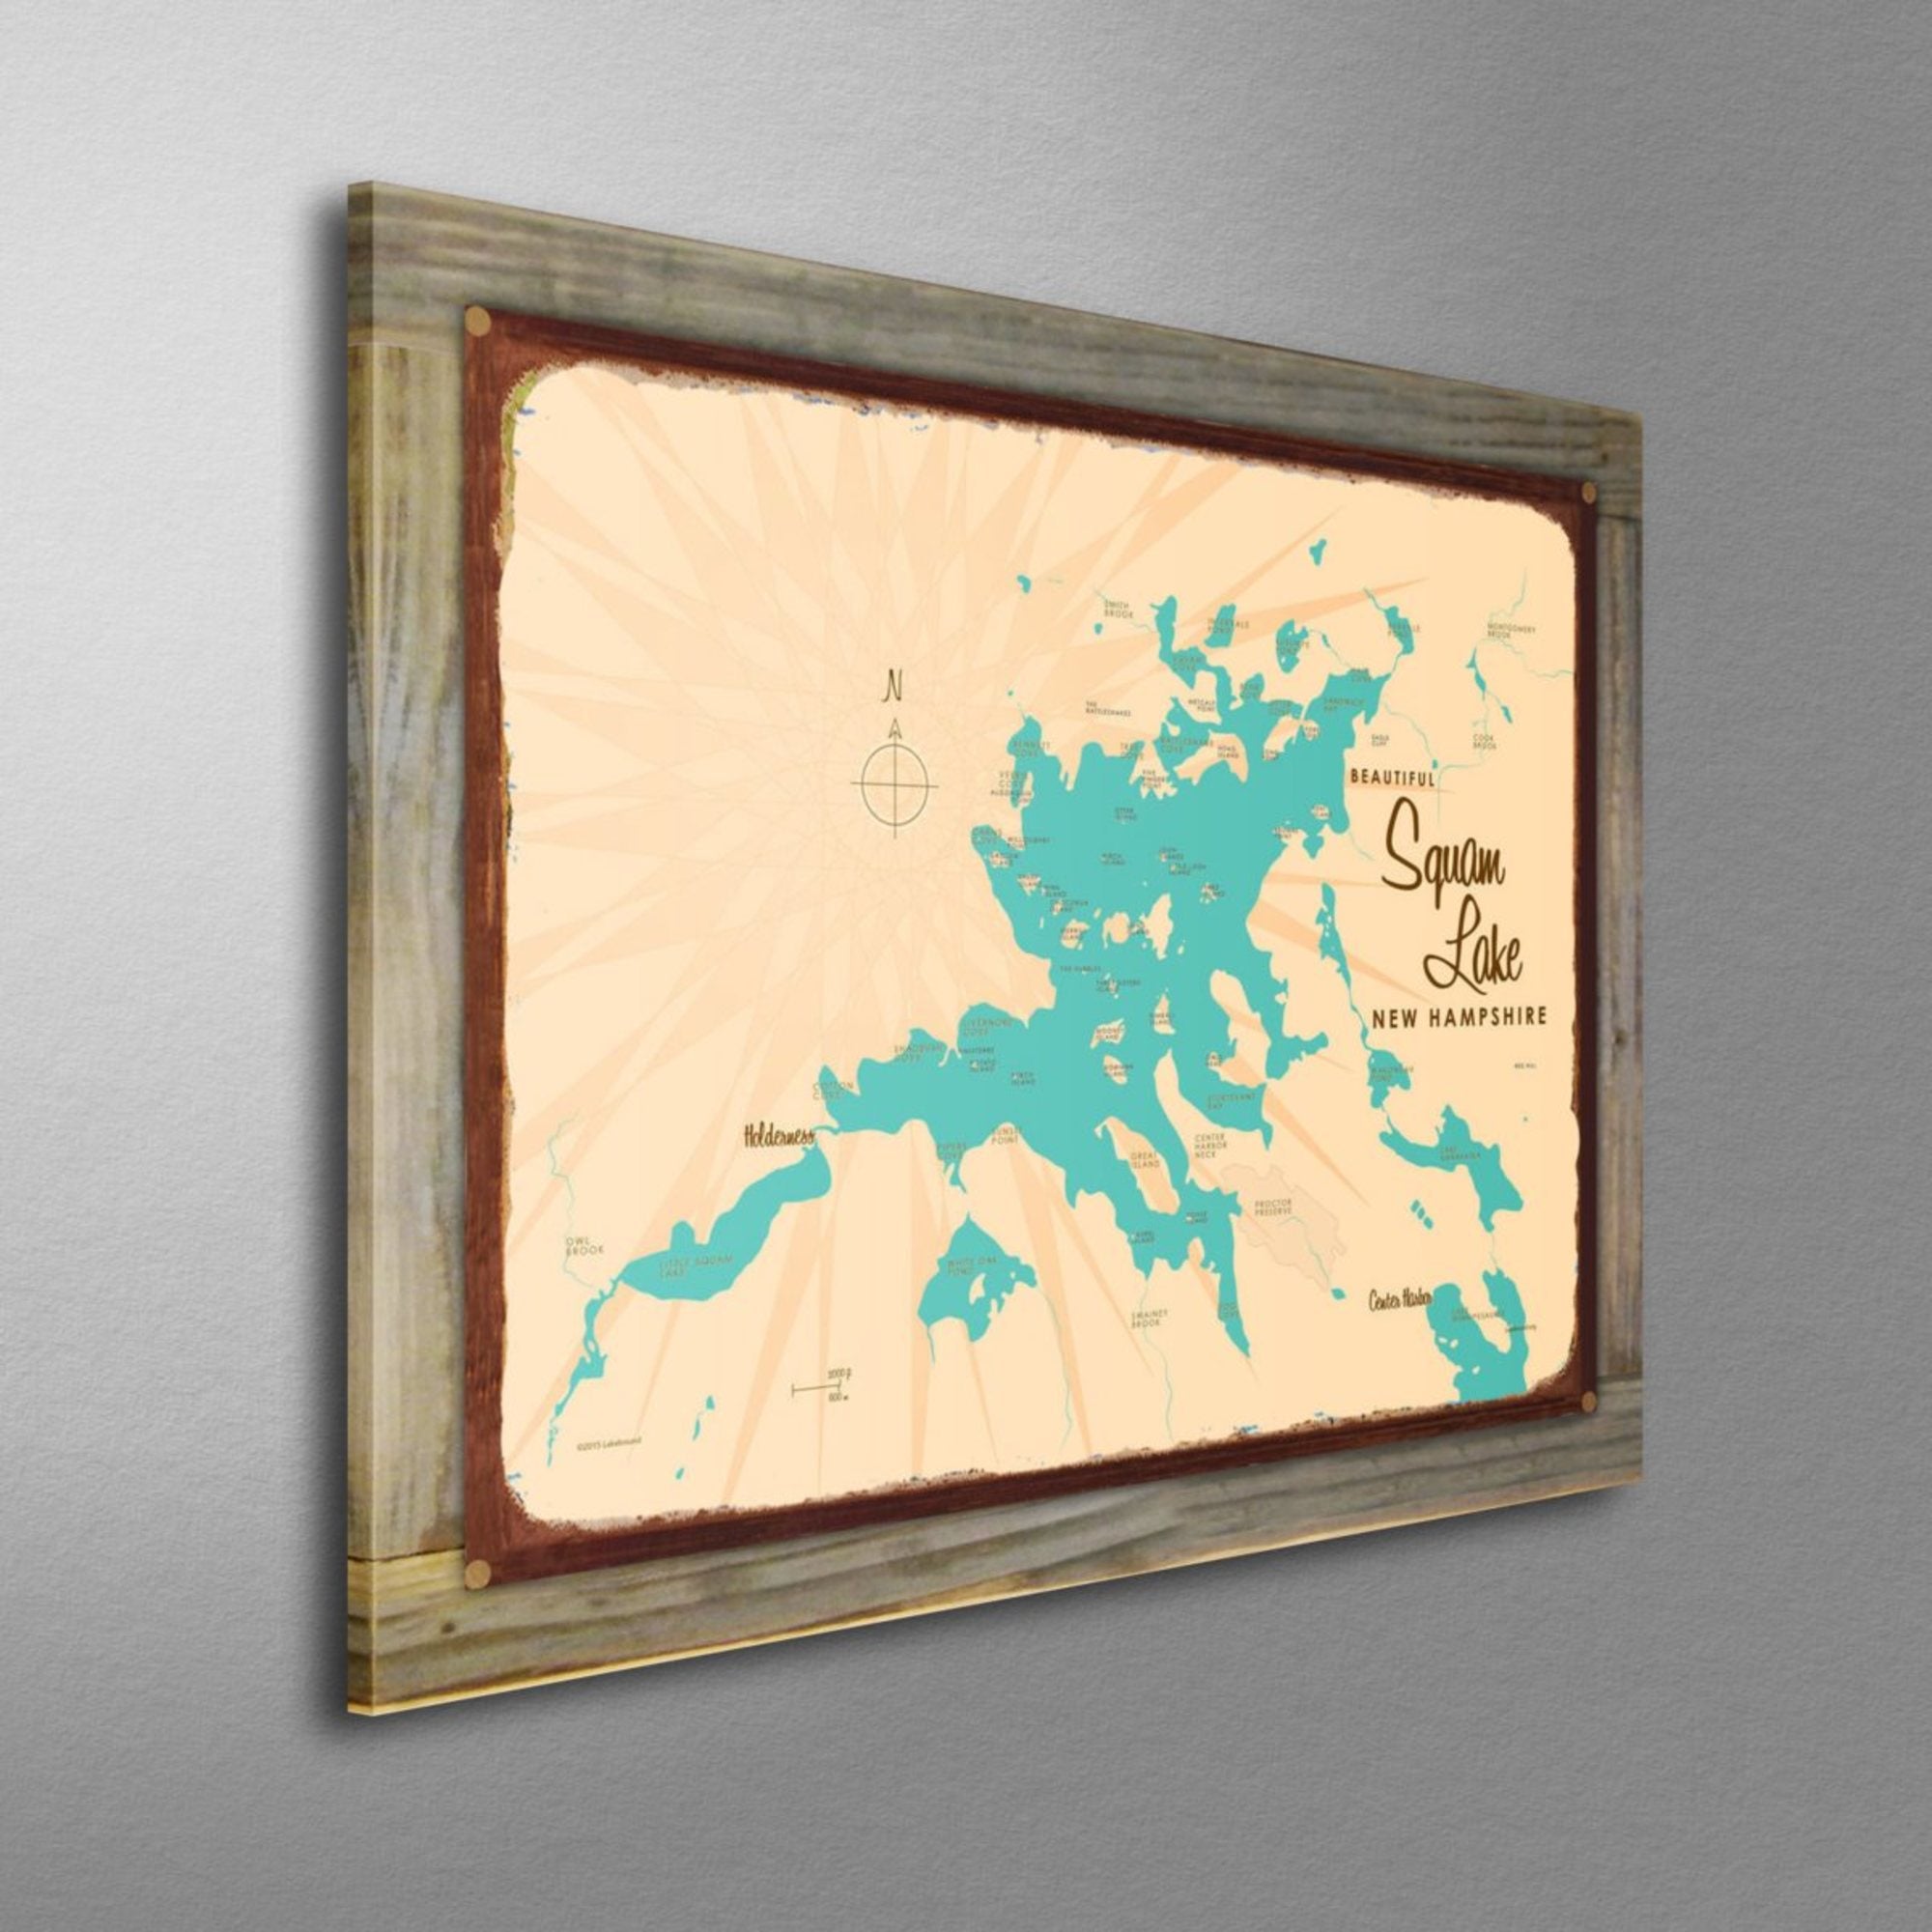 Squam Lake New Hampshire, Wood-Mounted Rustic Metal Sign Map Art